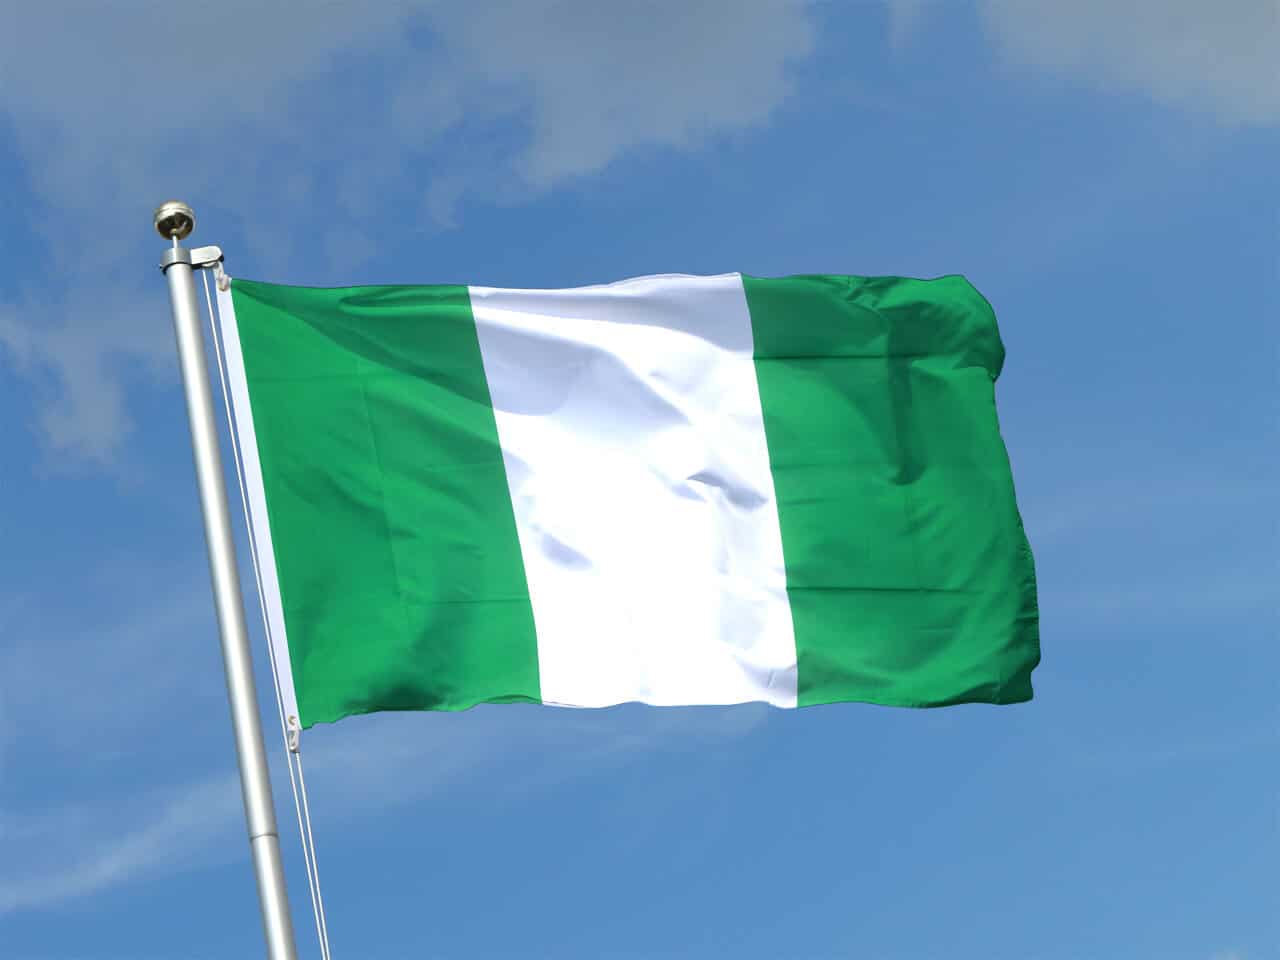 Forex brokers in nigeria